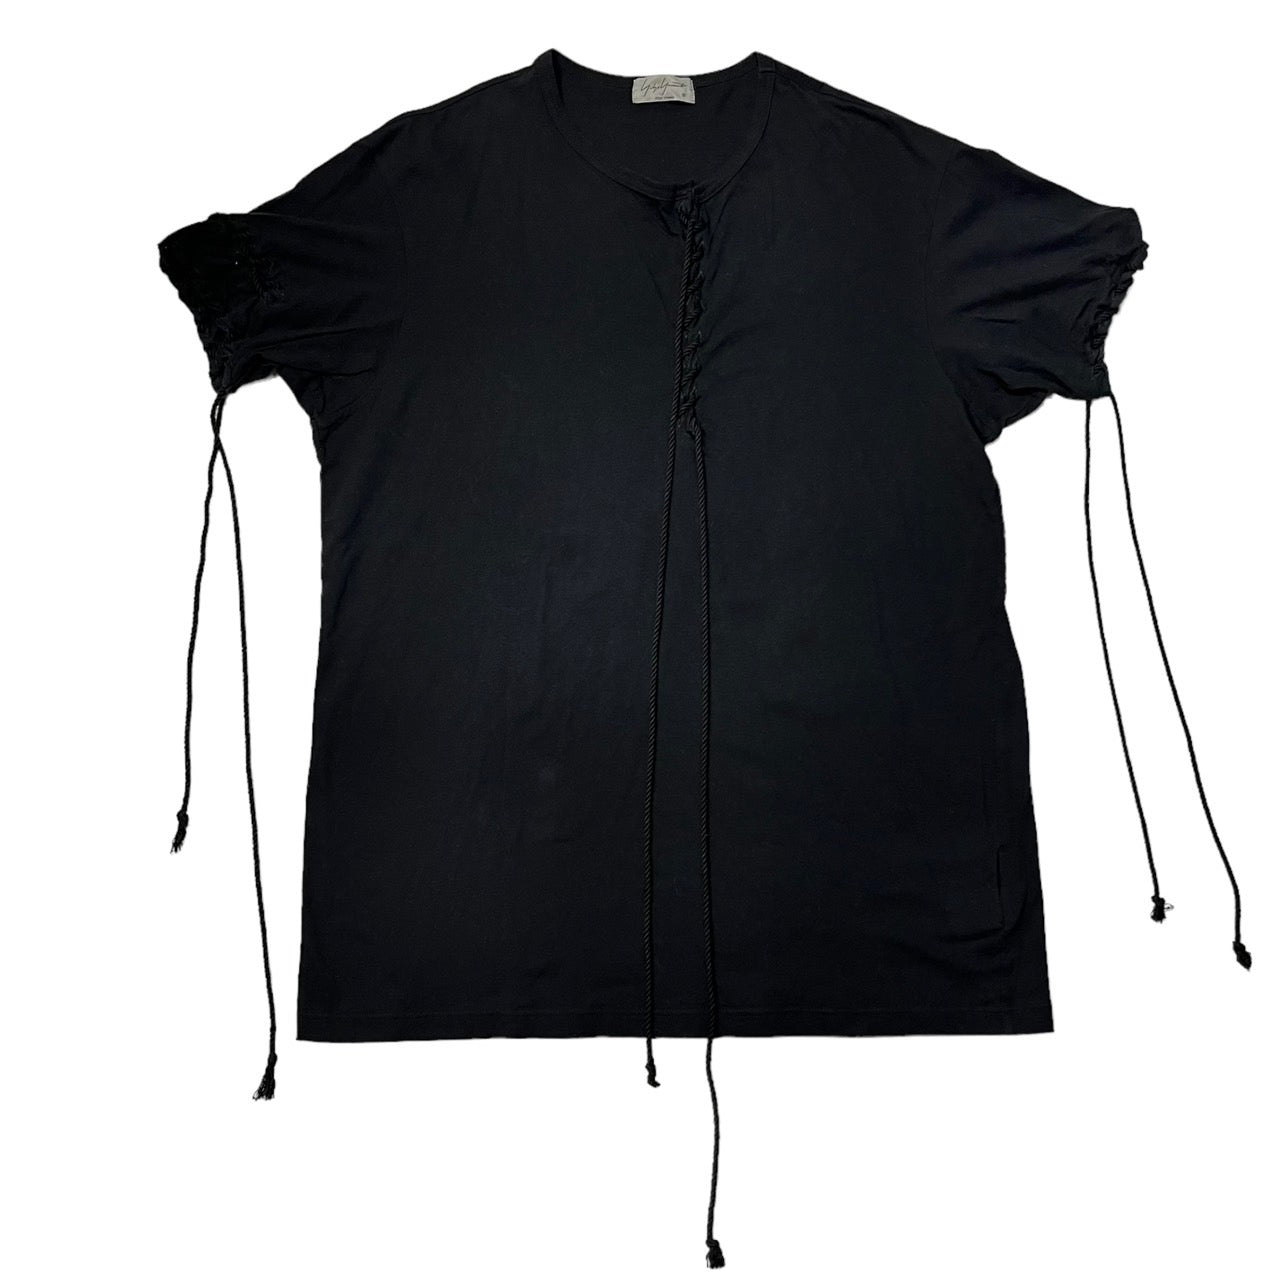 YOHJI YAMAMOTO POUR HOMME(ヨウジヤマモトプールオム) 19SS ヒモ通し丸首半/ Lace-up round neck short sleeve T-shirt HH-T29-083 SIZE 3(L) ブラック